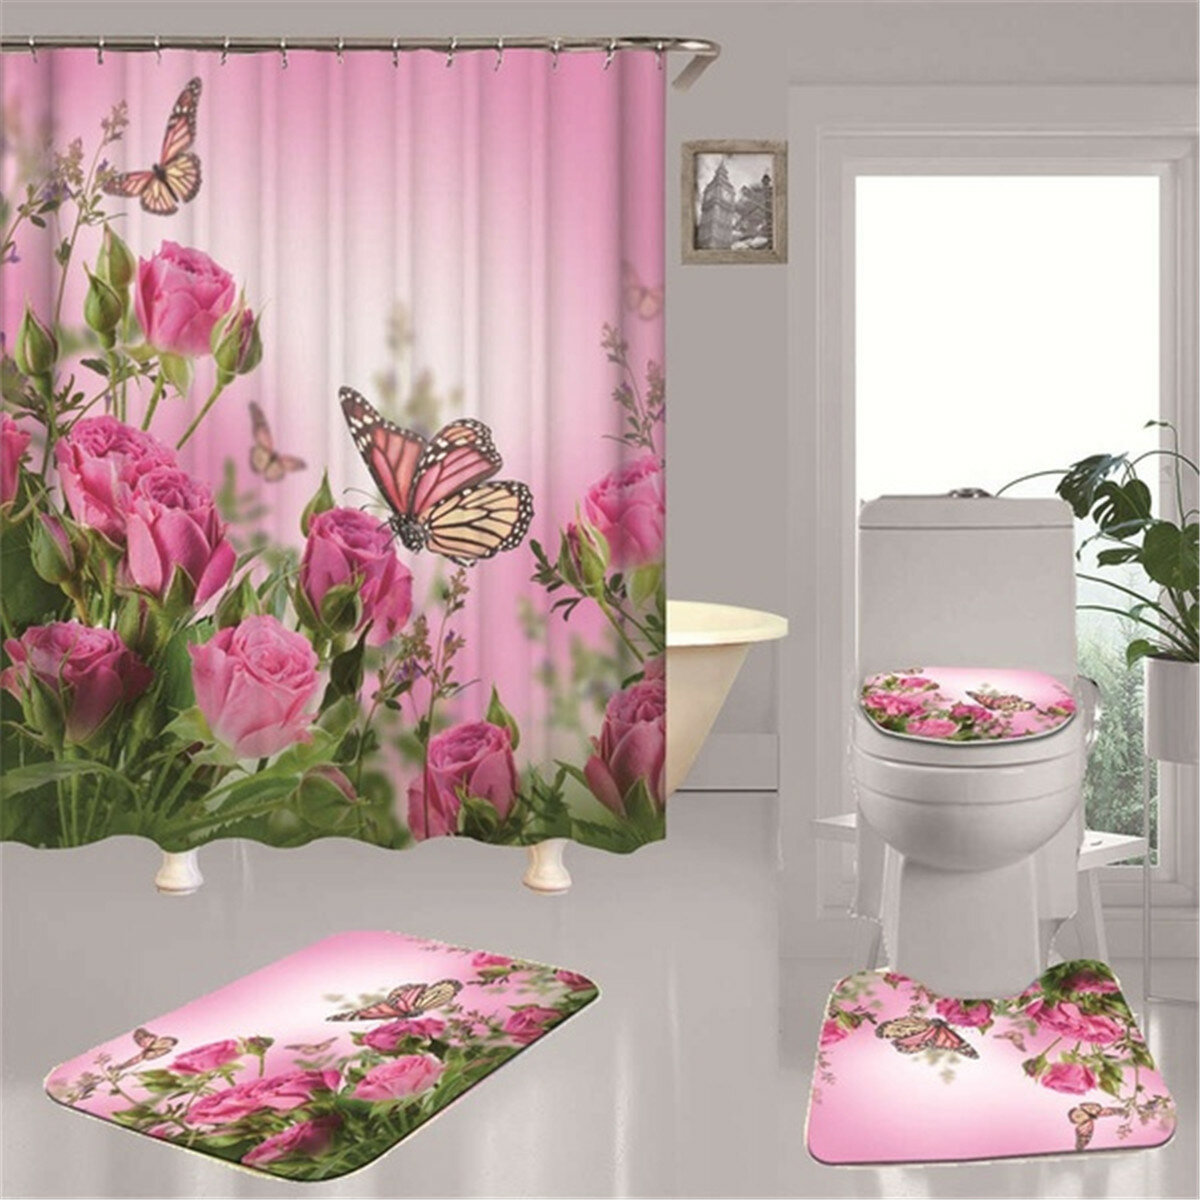 Rose Butterfly Shower Curtain Bath-Mat Toilet Cover Rug Bathroom Decor Set 